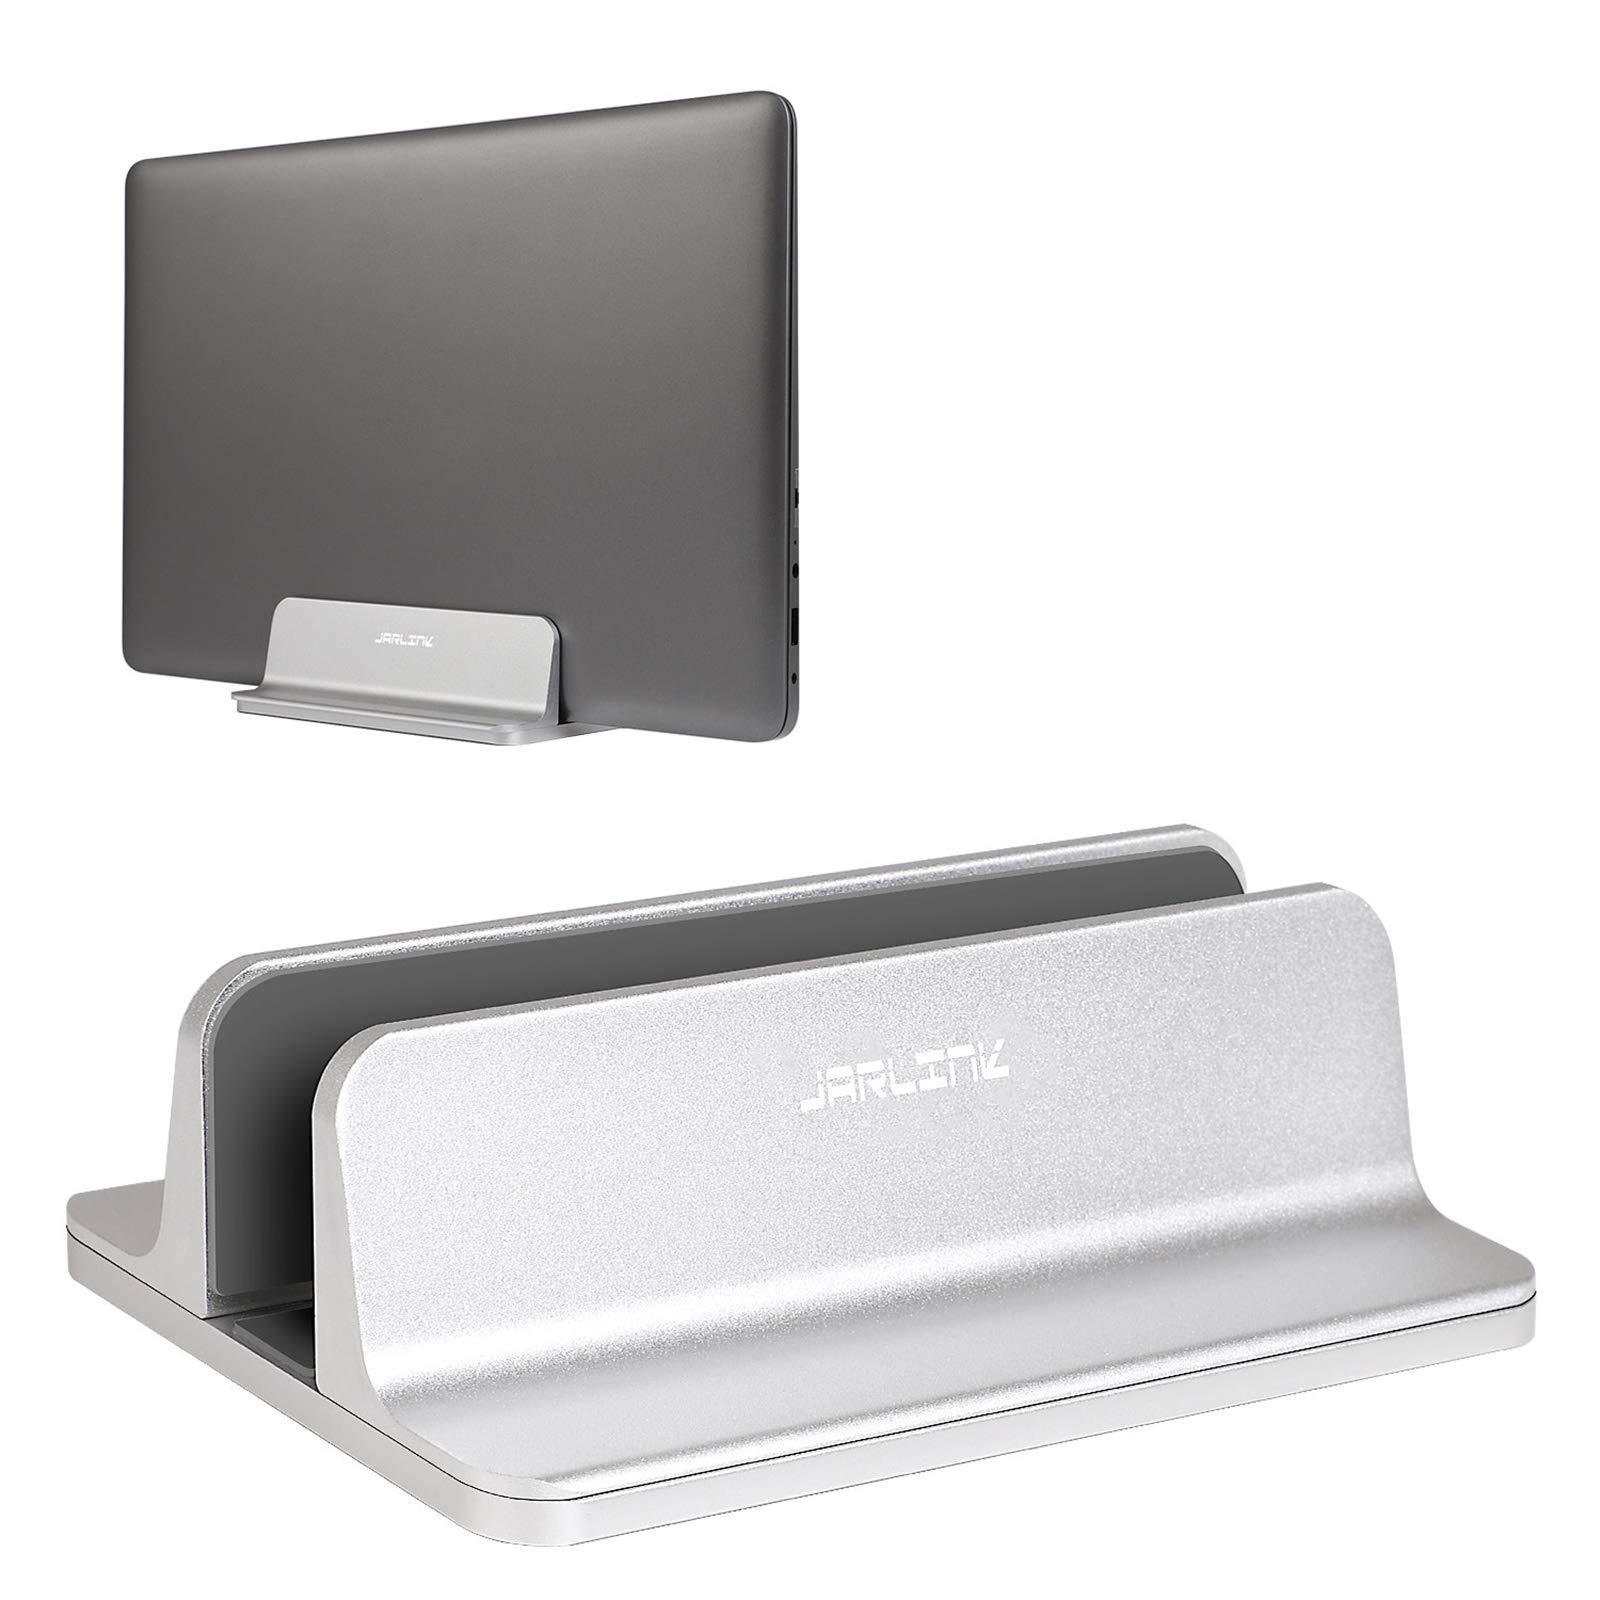 jarlink vertical laptop stand, aluminum laptop holder desktop stand with adjustable dock size (up to 17.3 inches) compatible 